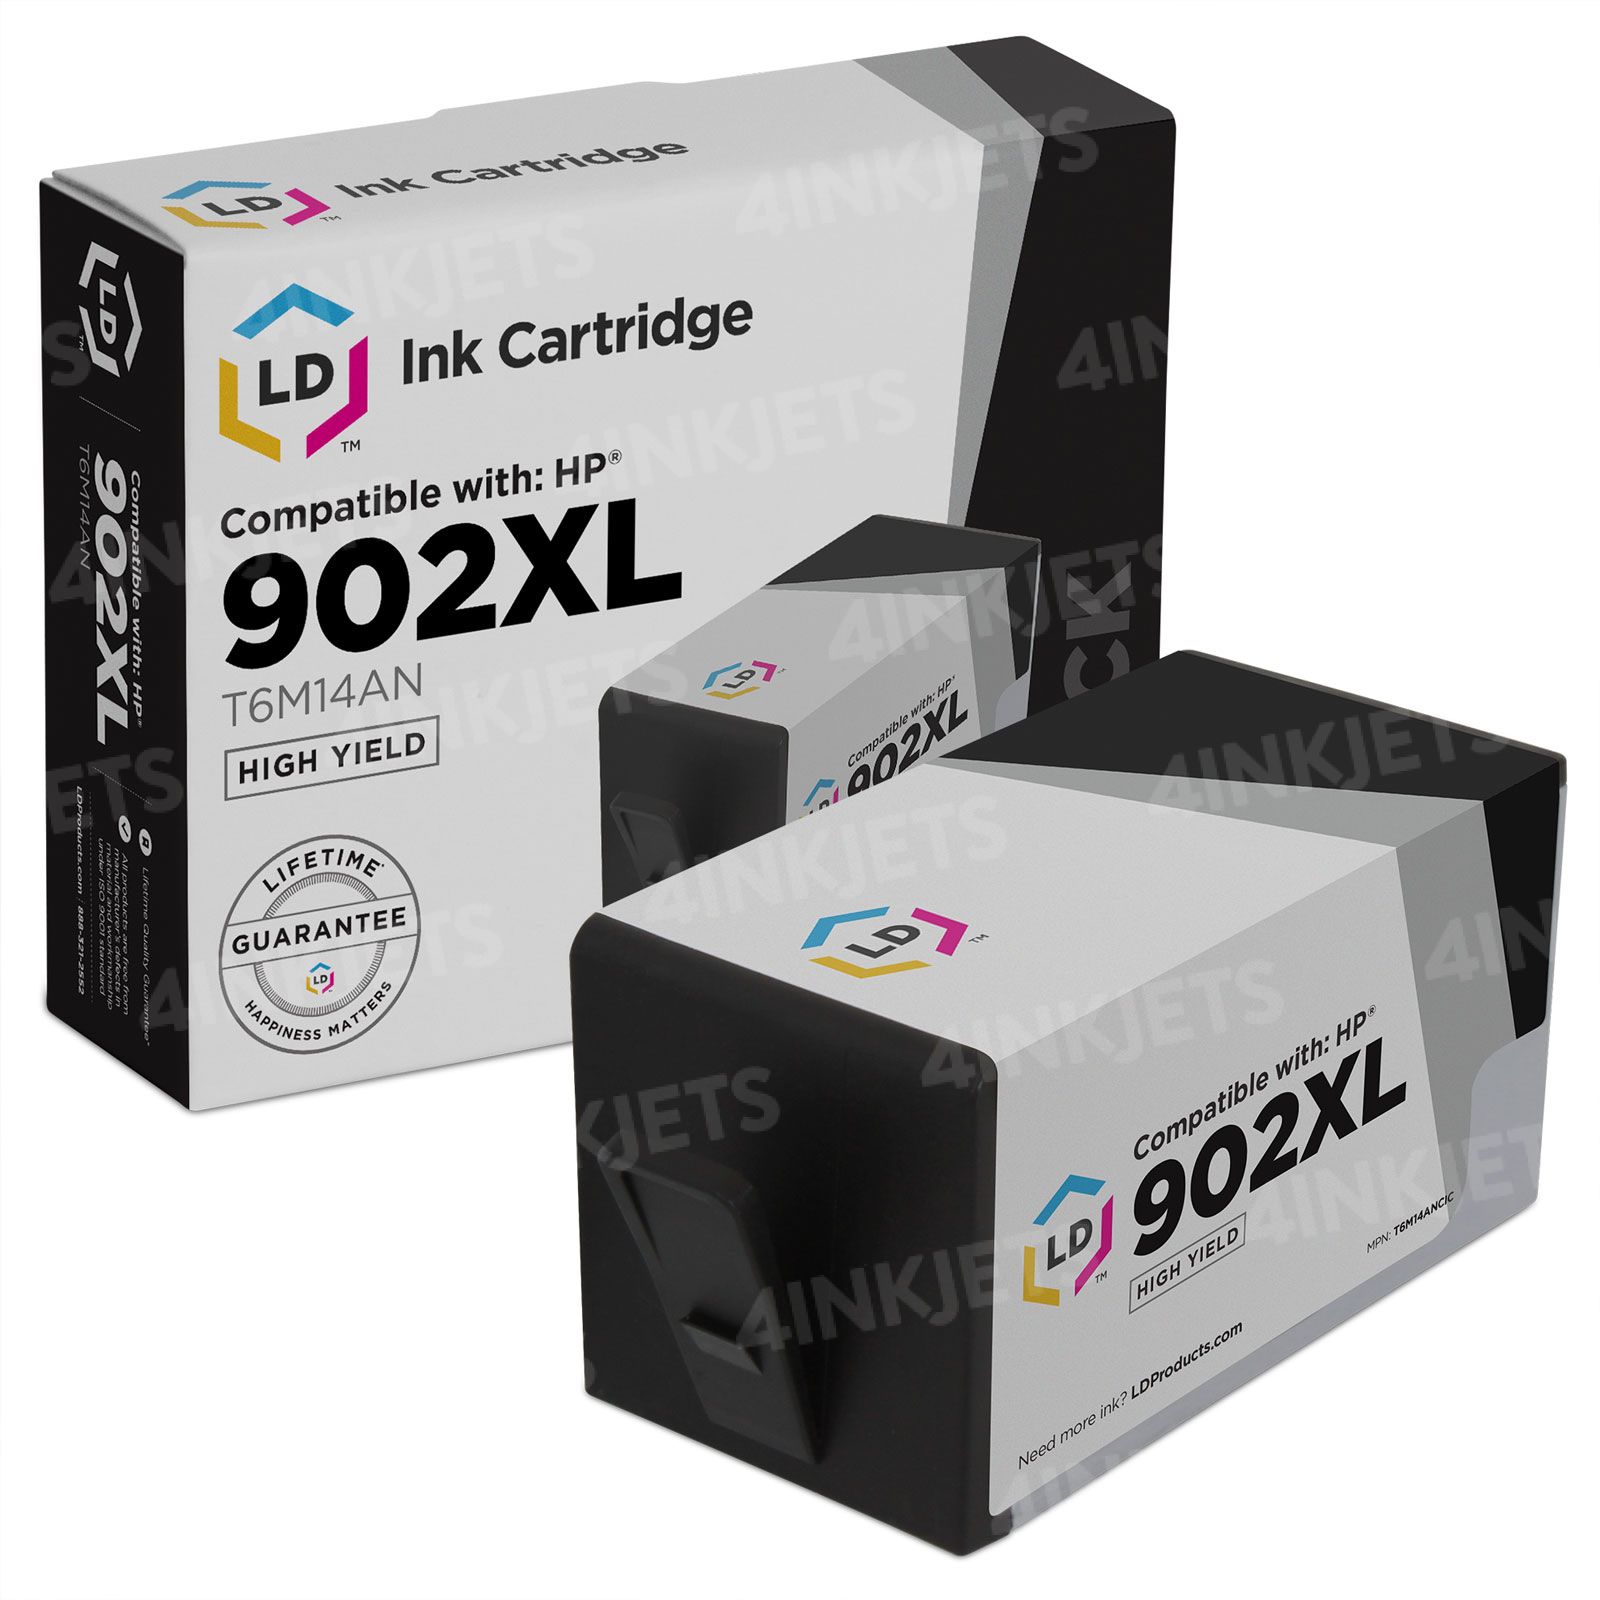  902XL Black High-Yield Ink Cartridge